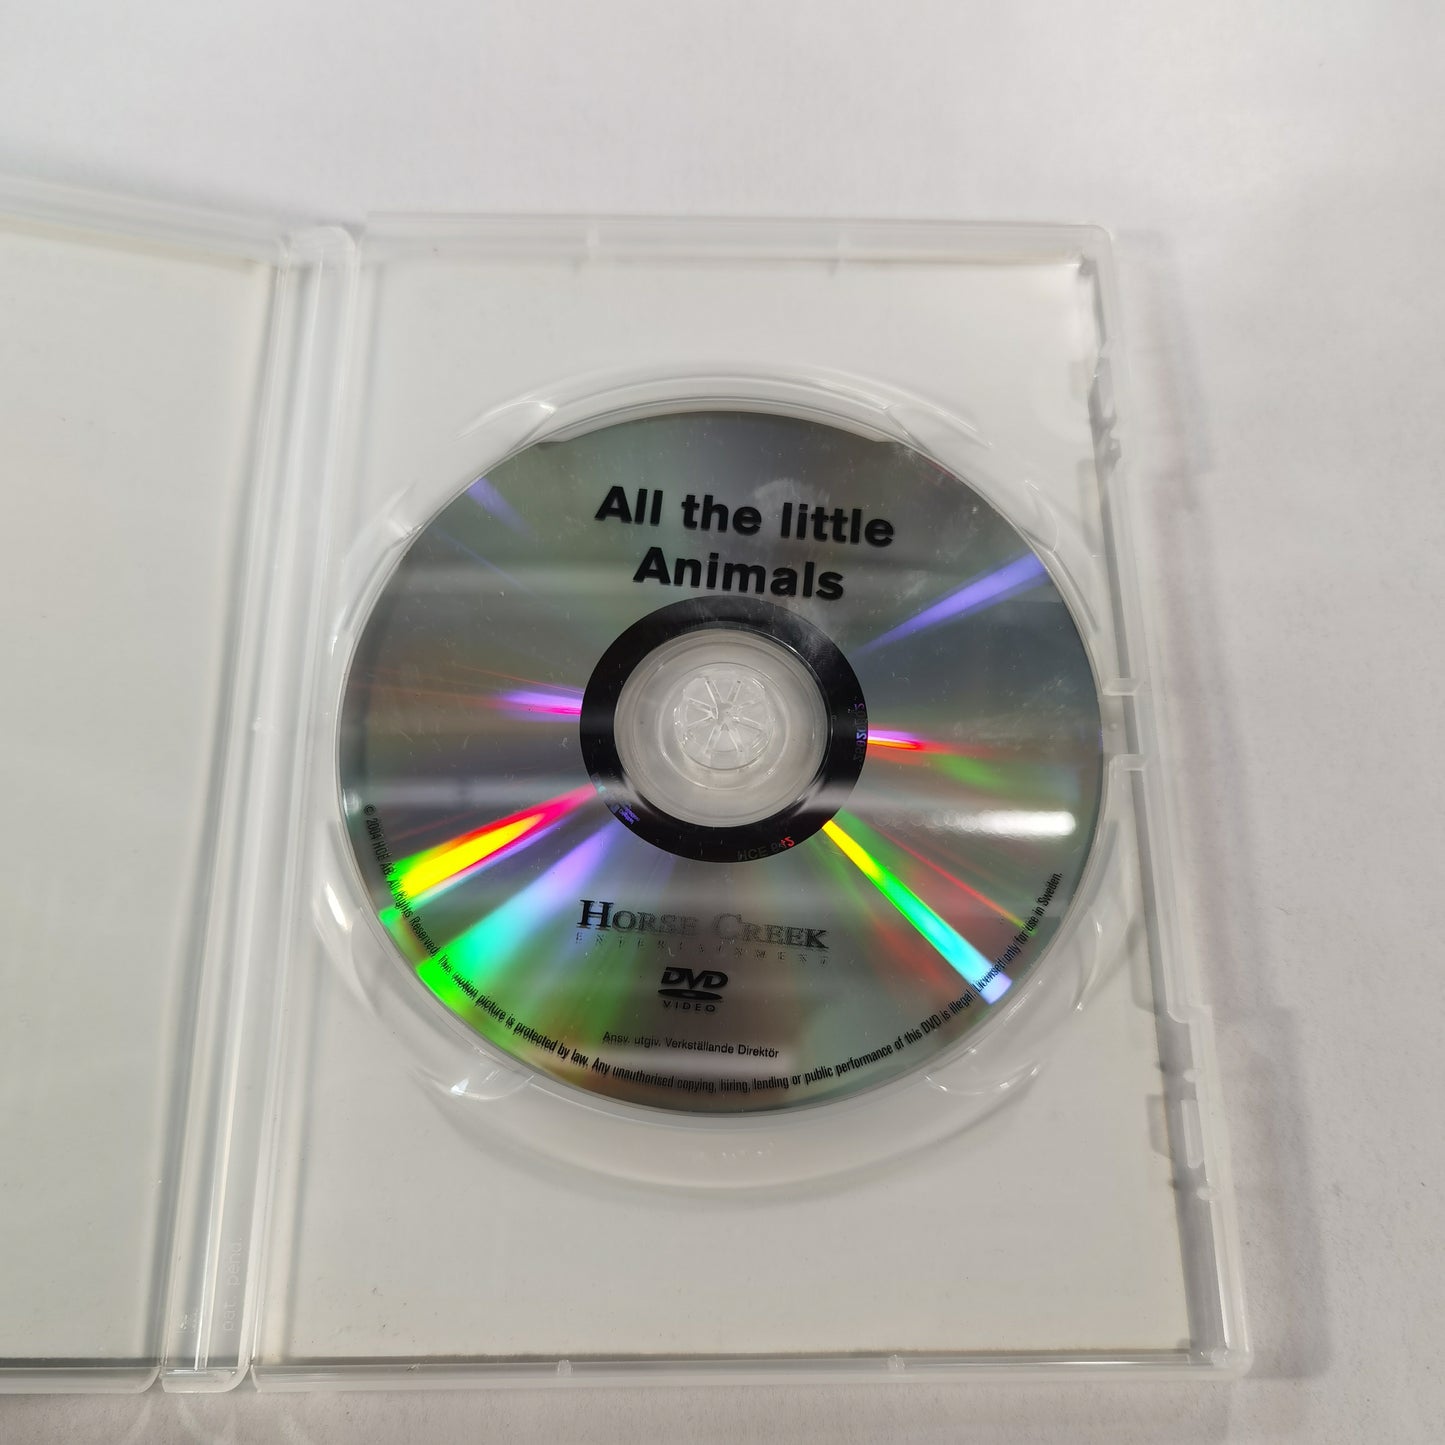 All the Little Animals (1998) - DVD SE 2004